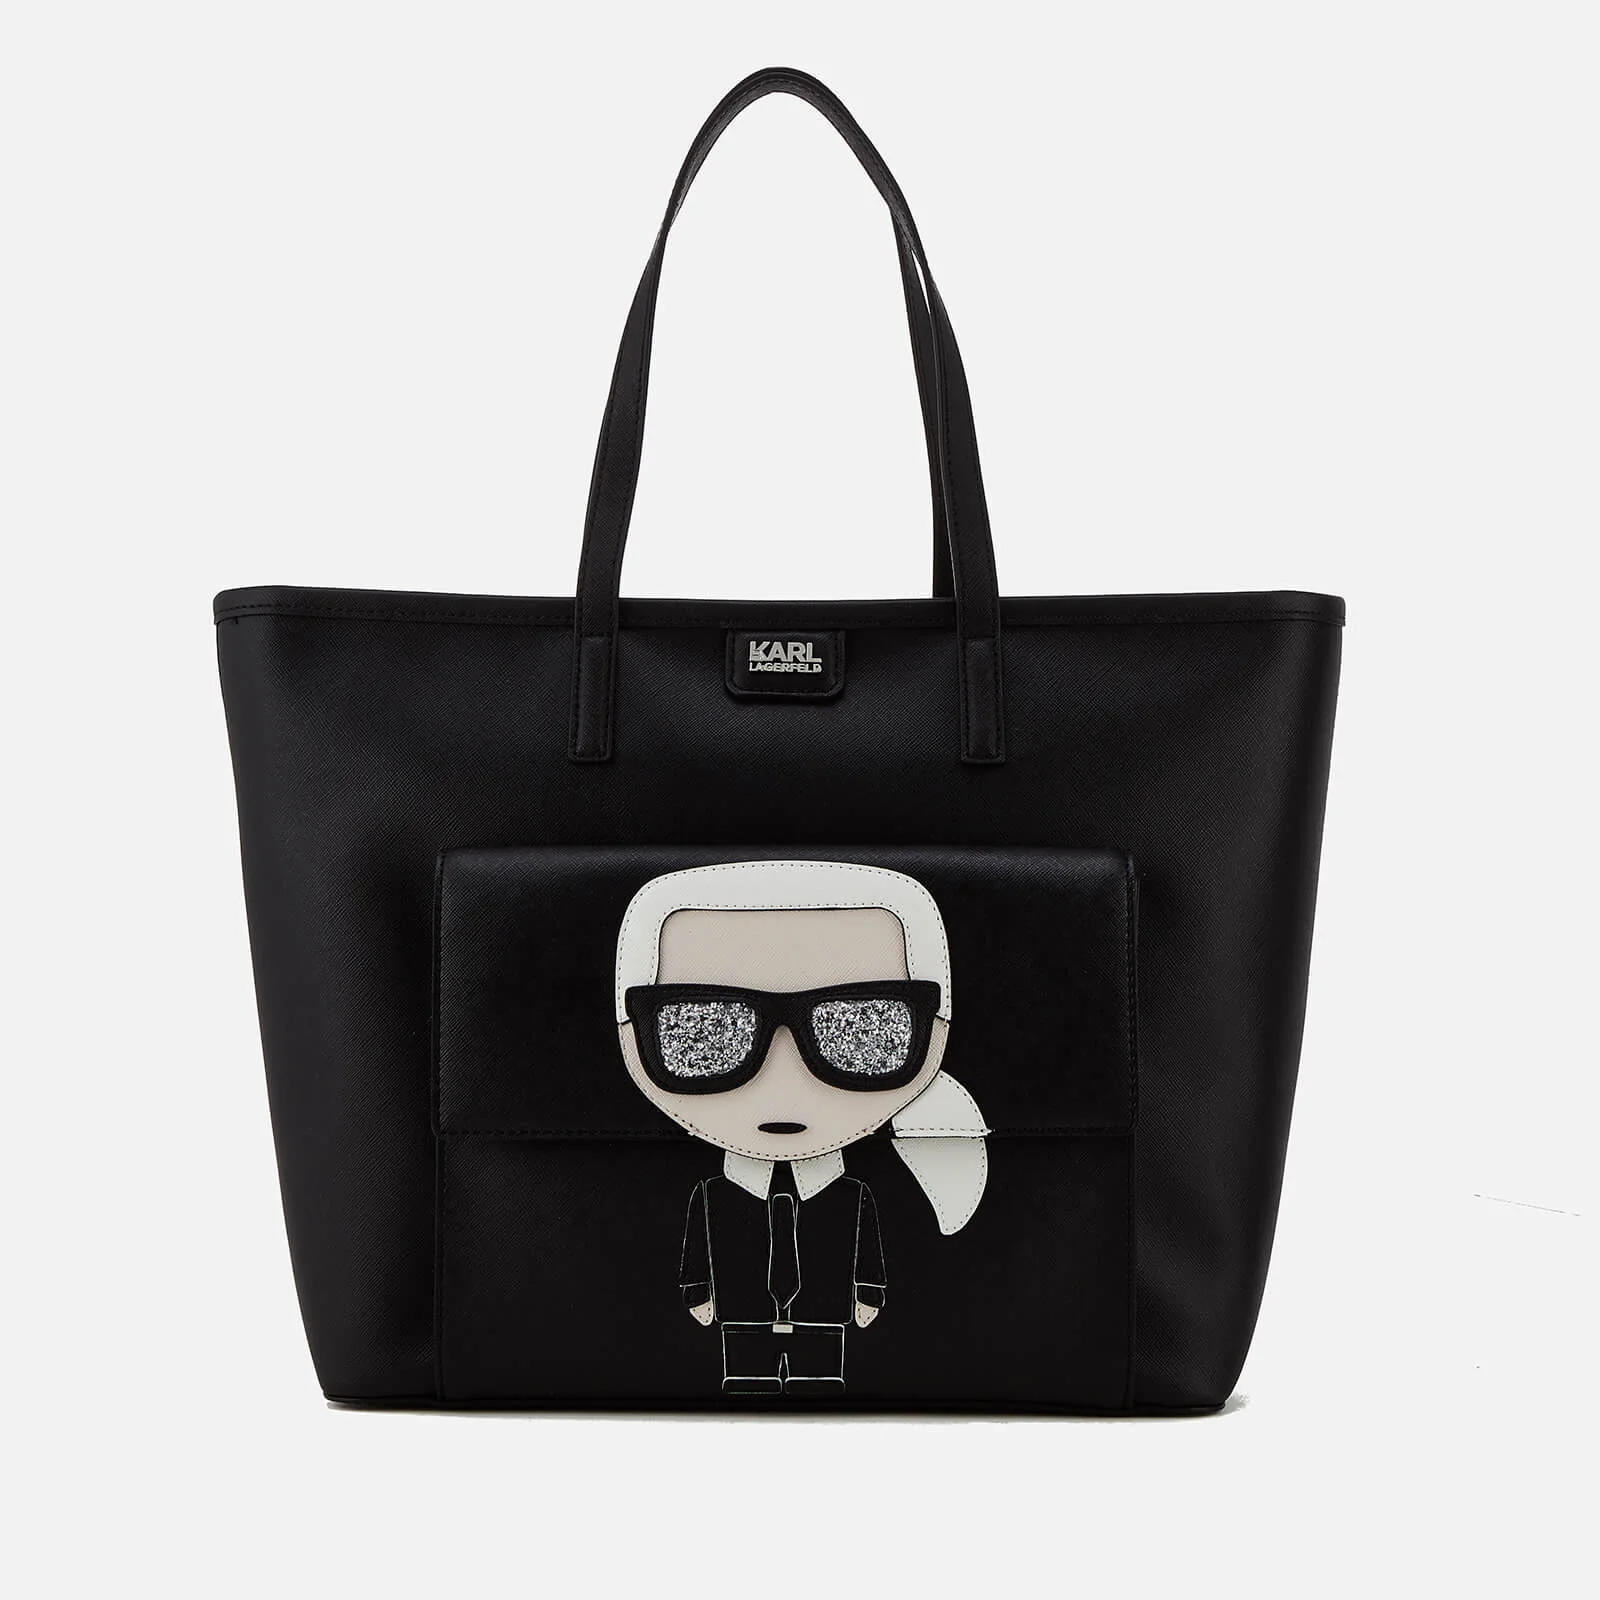 Karl Lagerfeld Women's K/Ikonik Shopper Bag - Black Image 1